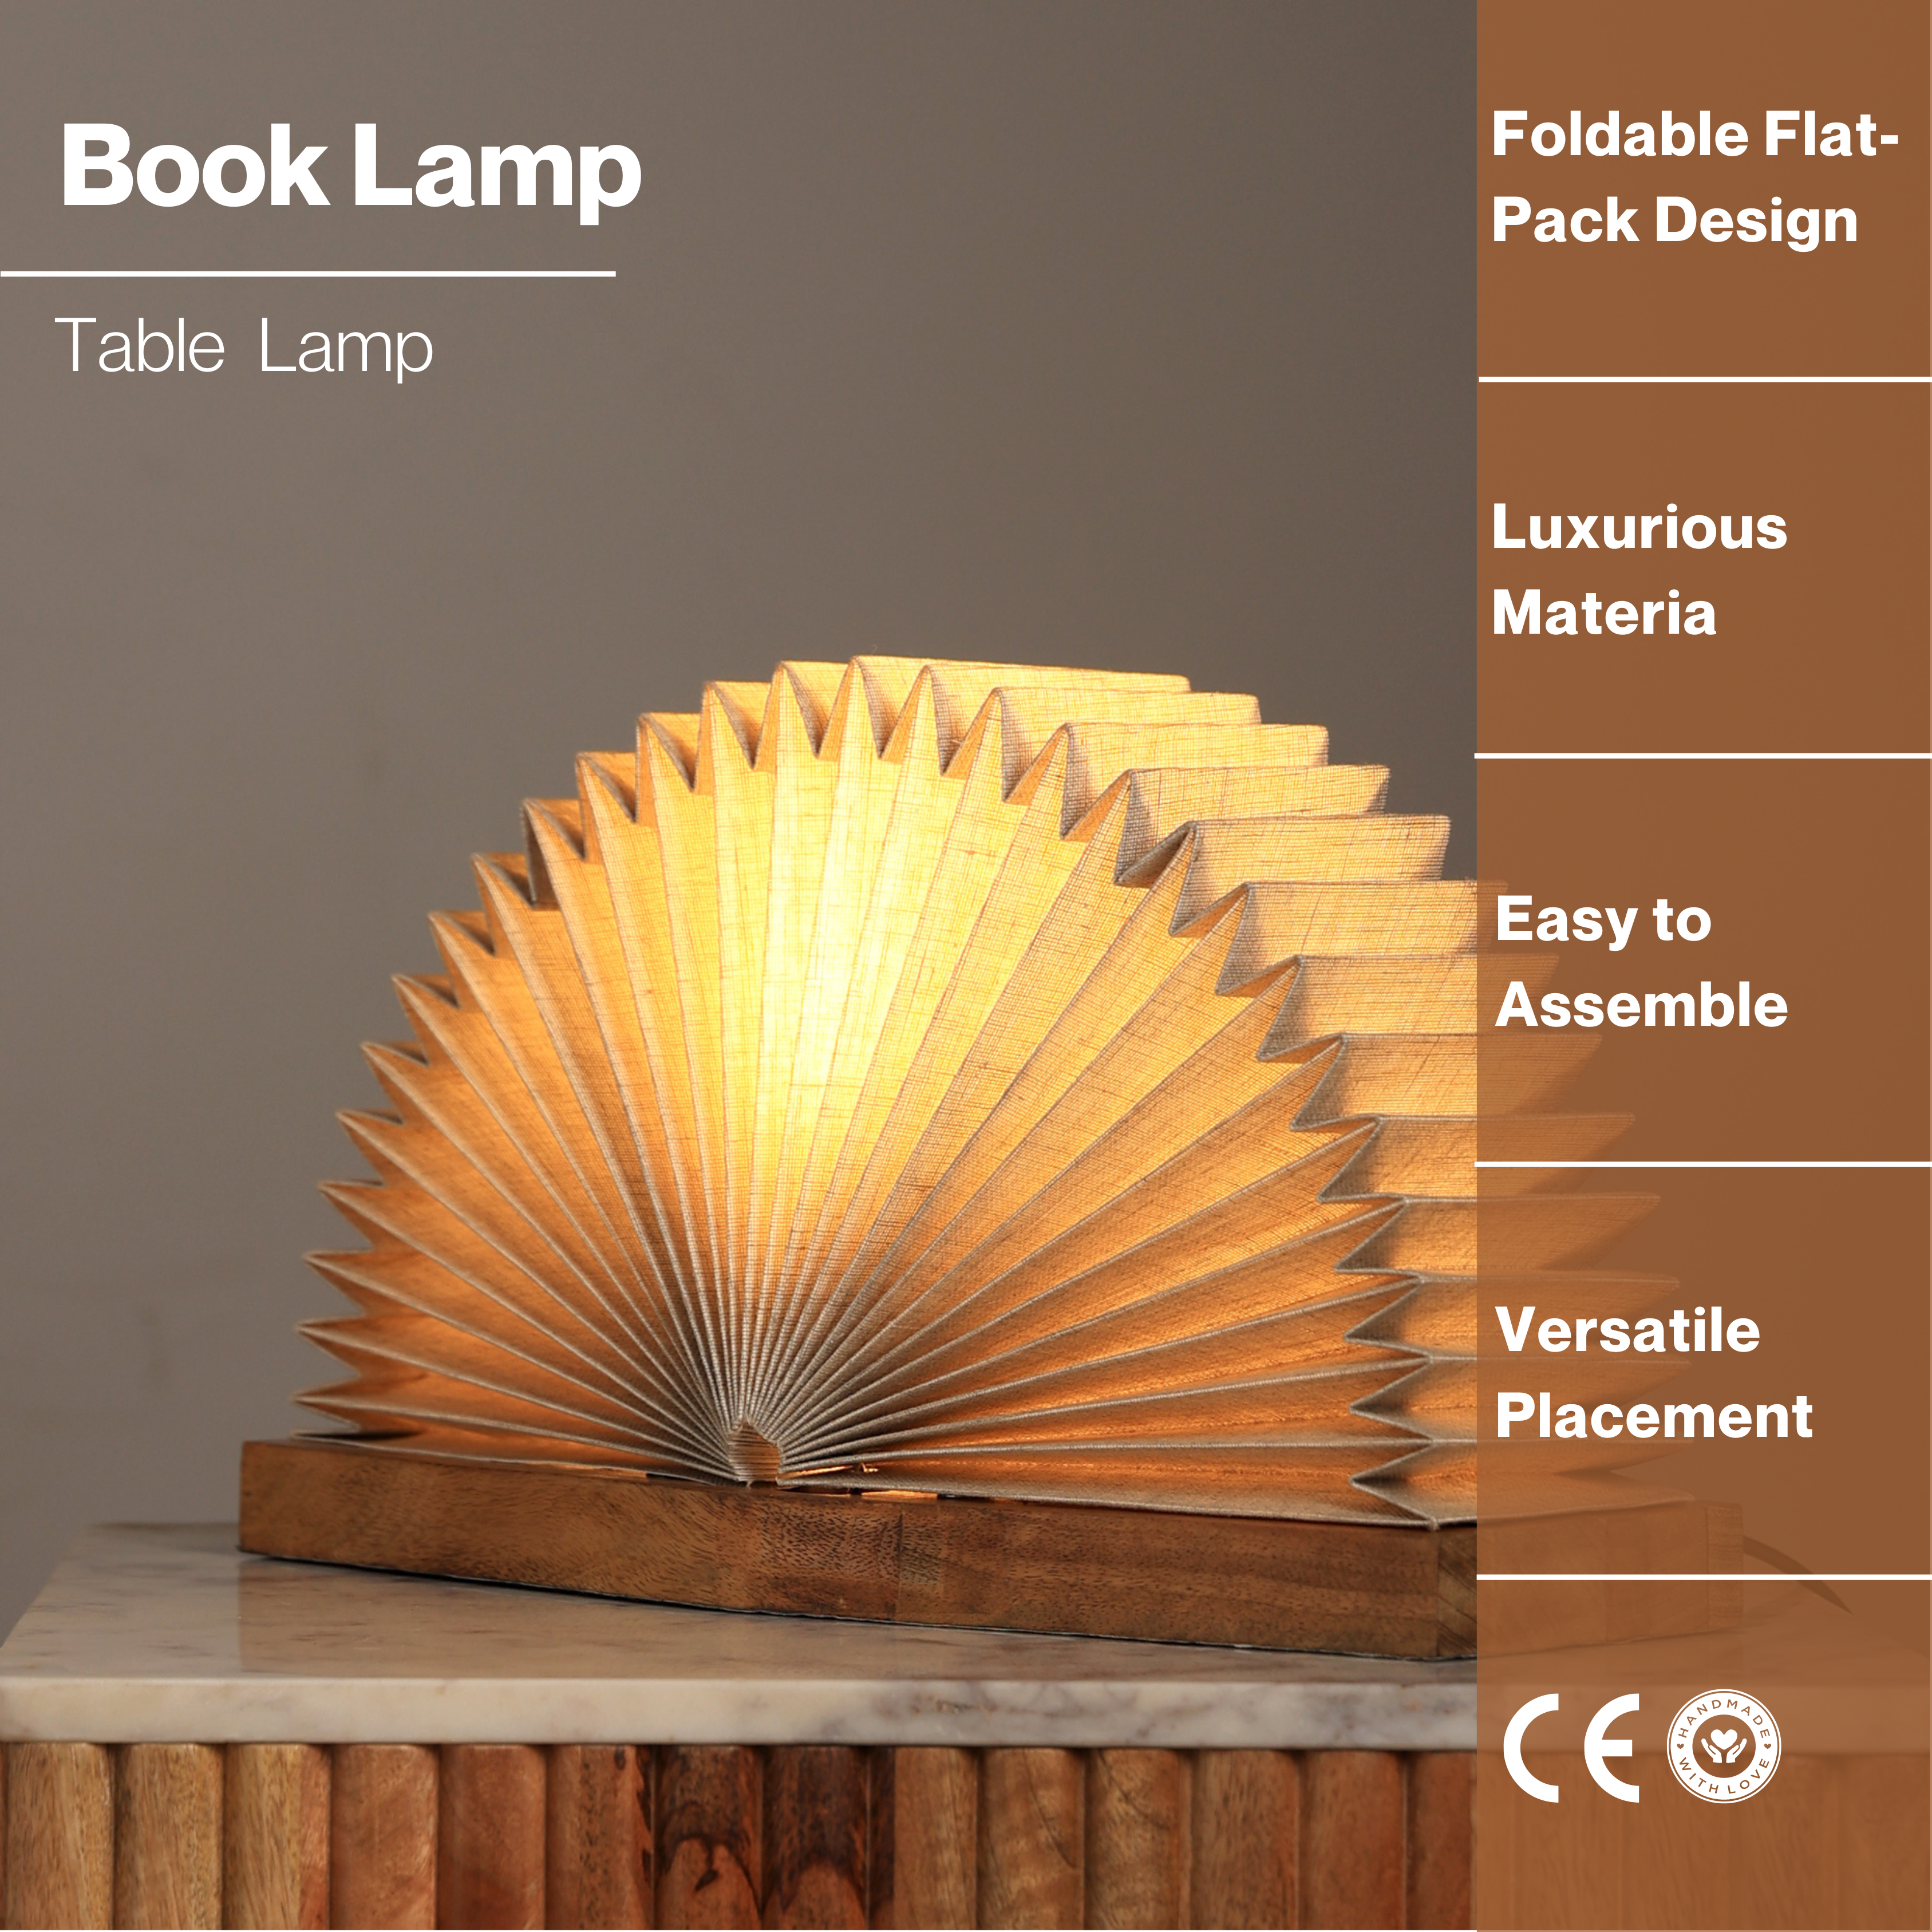 LINEN BOOK TABLE LAMP - FOLDABLE LINEN DESK LAMP, MANGO WOOD BASE BEDSIDE, DESIGNED FOR MODERN SPACES